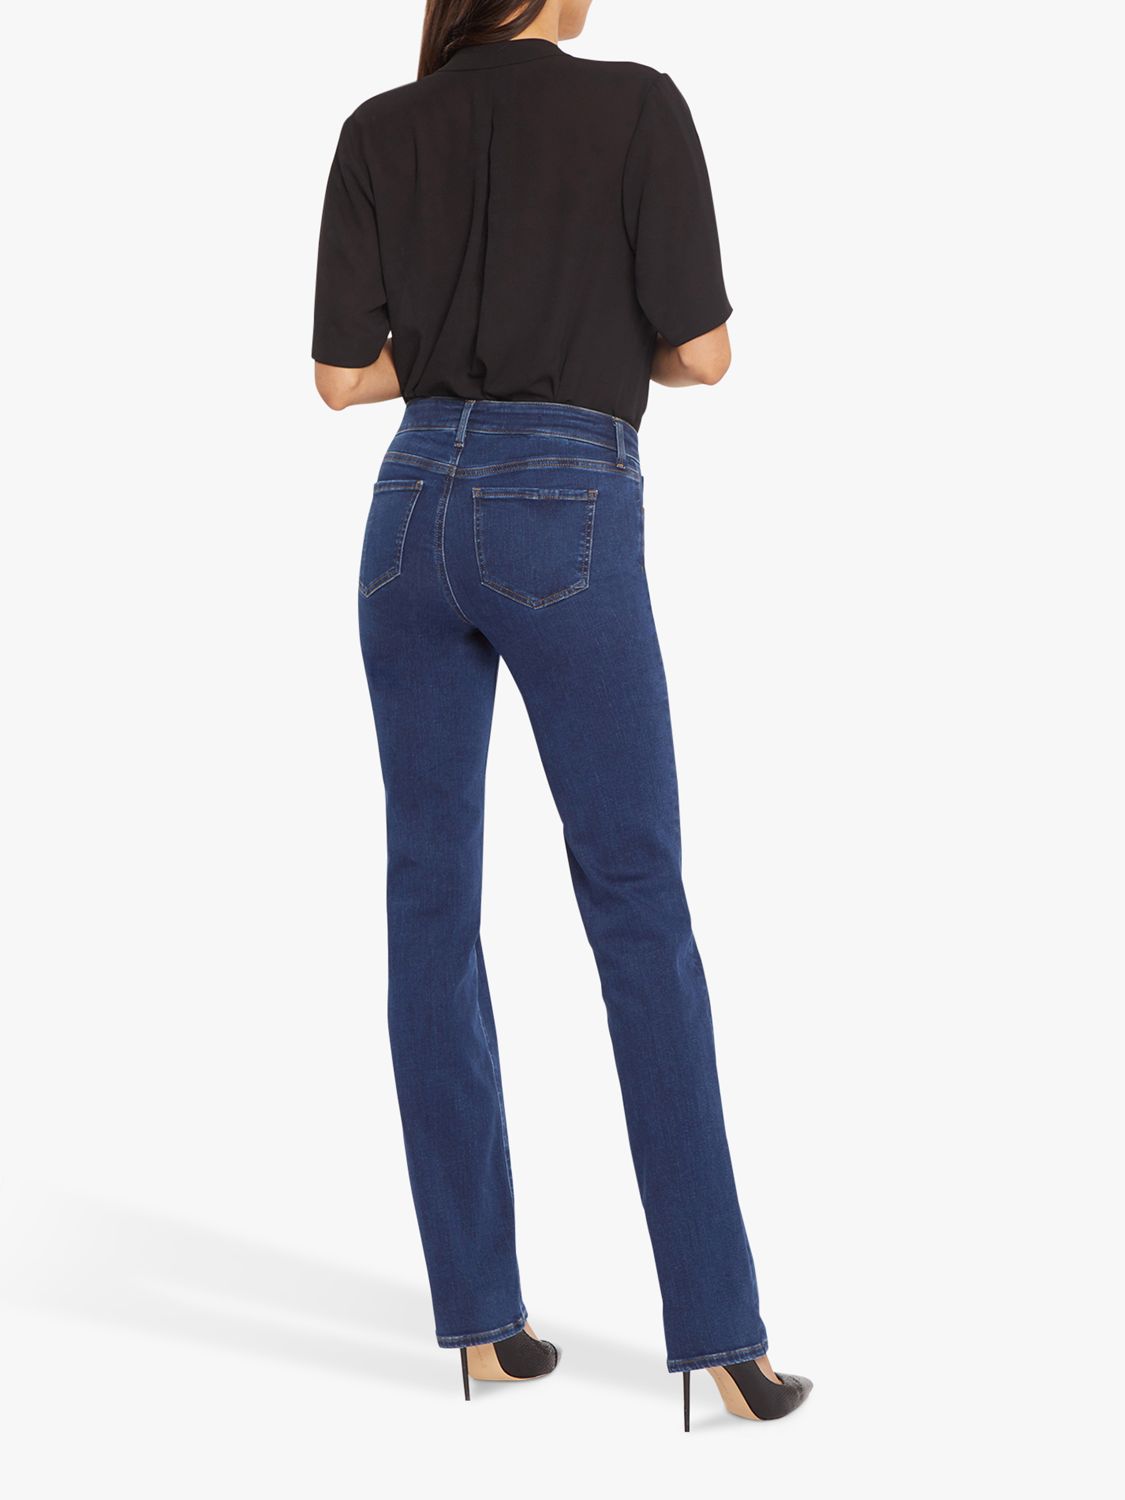 Marilyn Straight Jeans - Marcel Blue | NYDJ